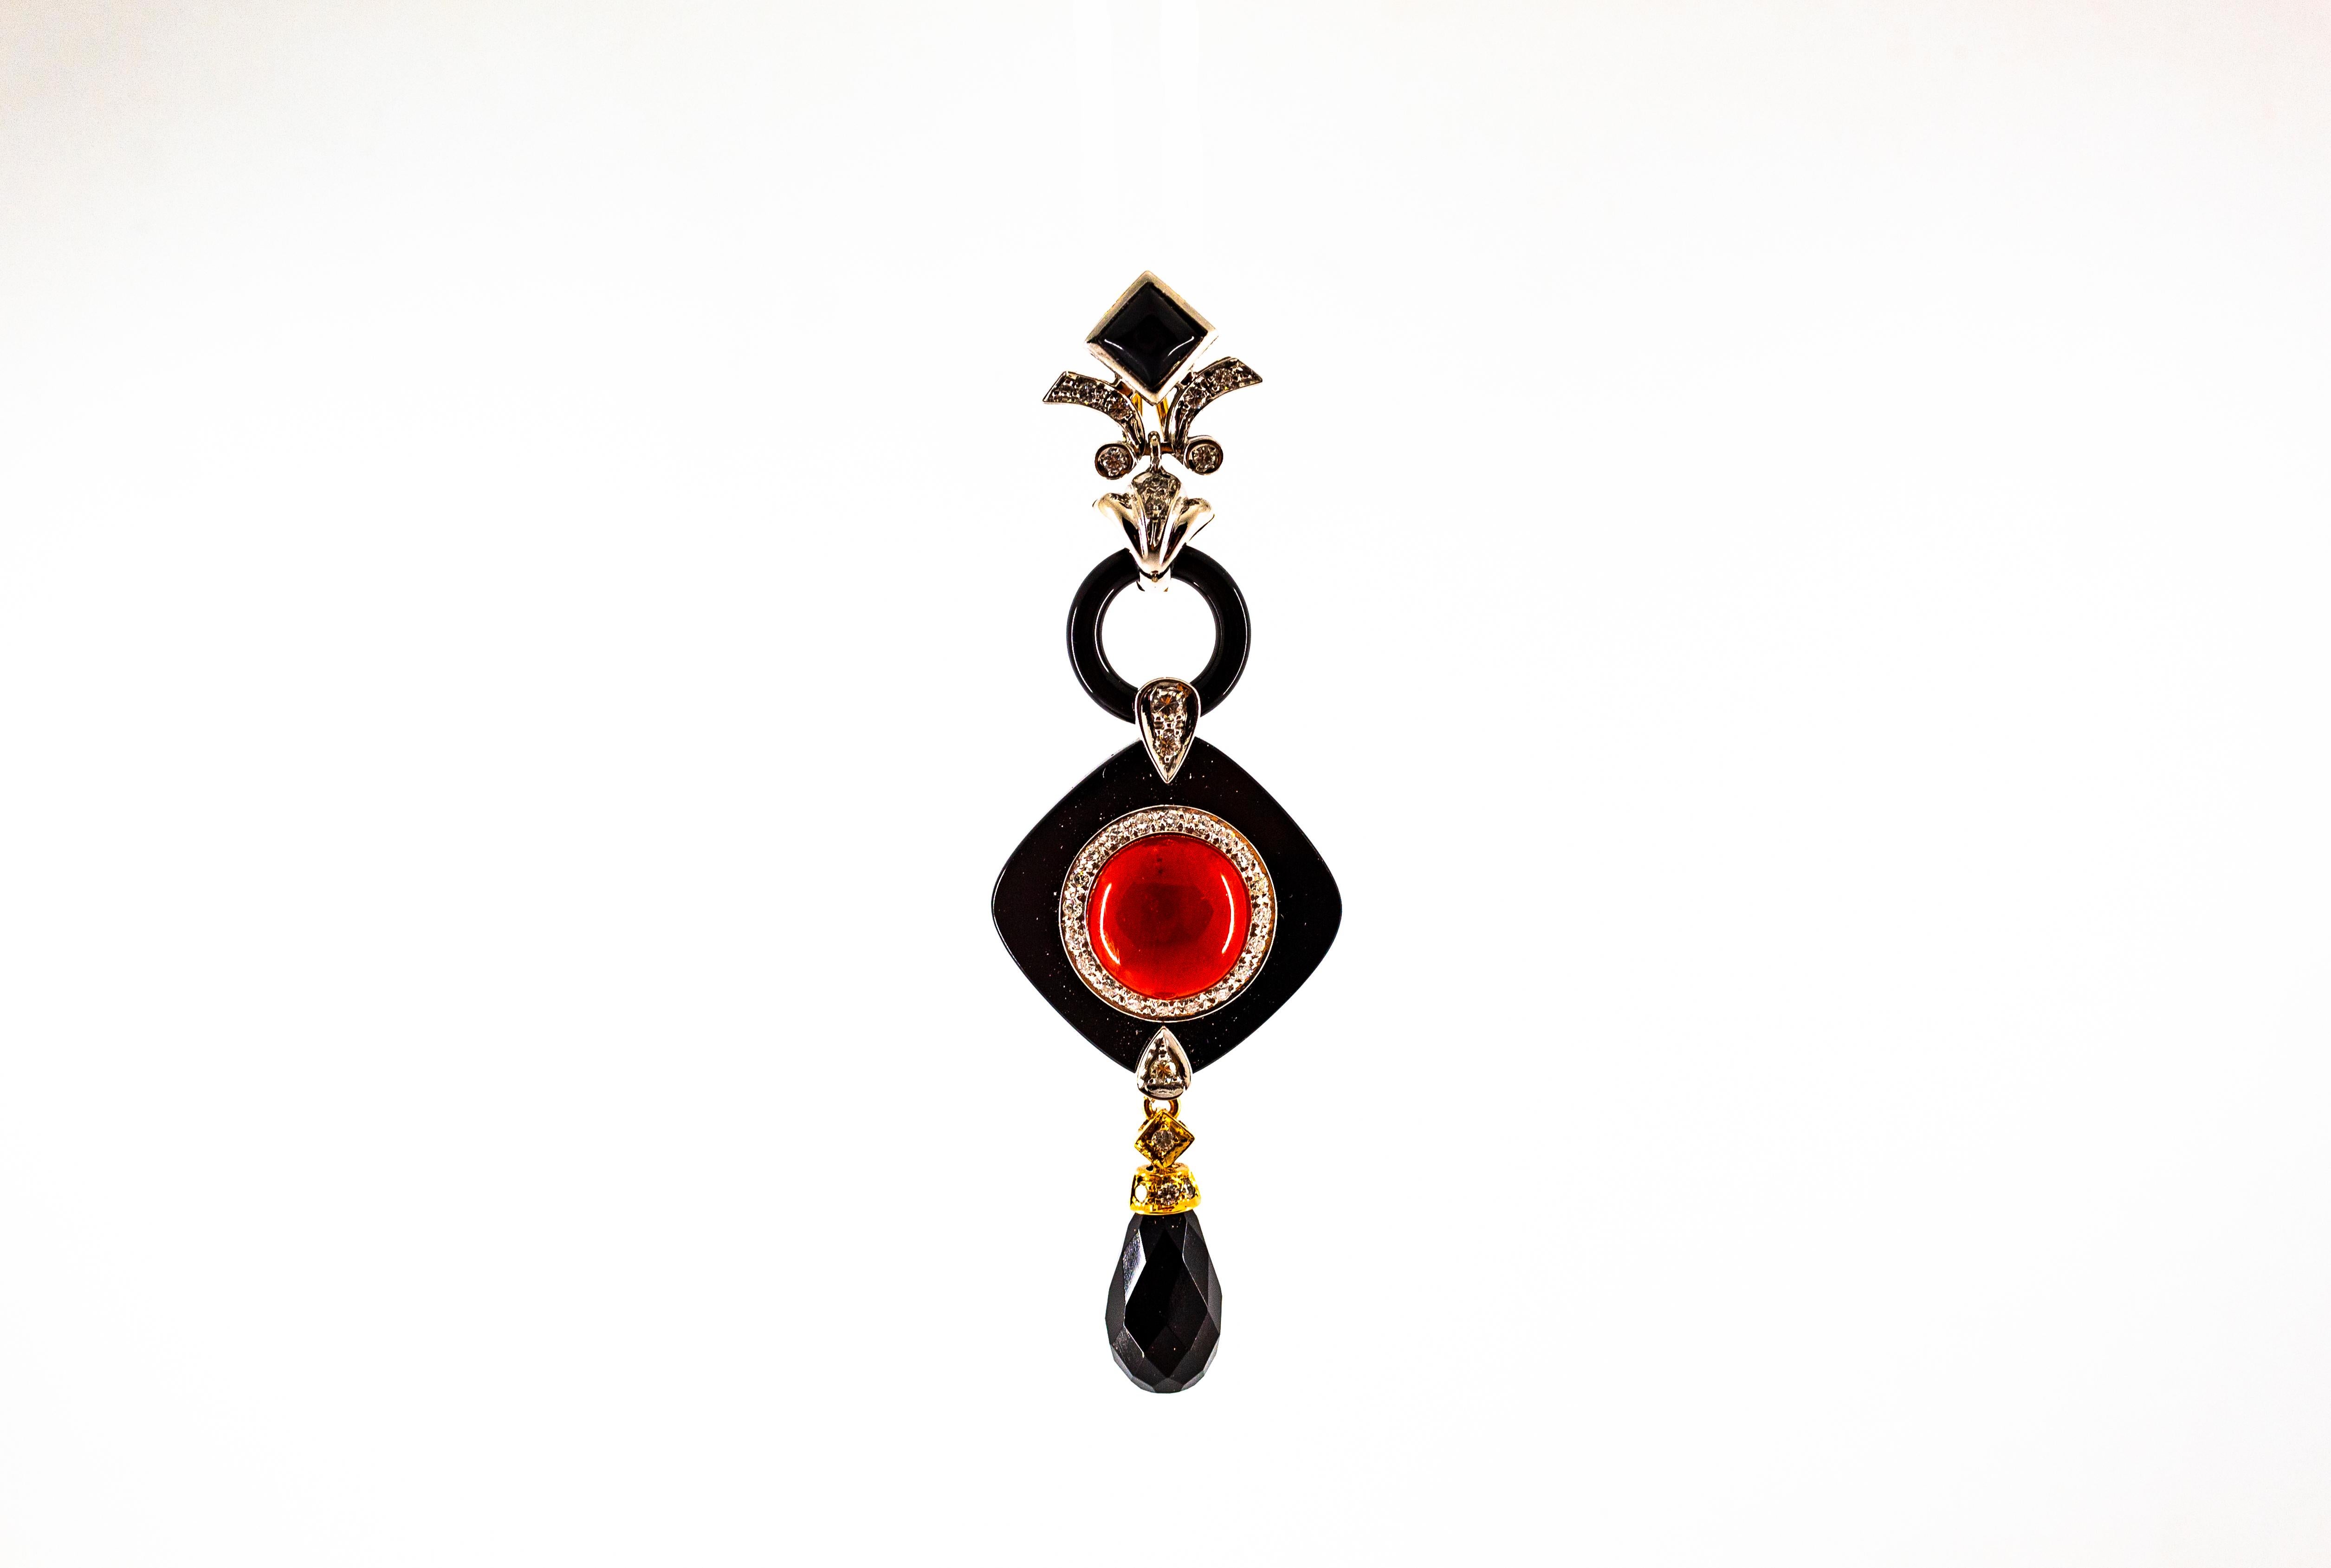 Brilliant Cut Art Deco Style Sardinia Red Coral White Diamond Onyx White Gold Pendant Necklace For Sale